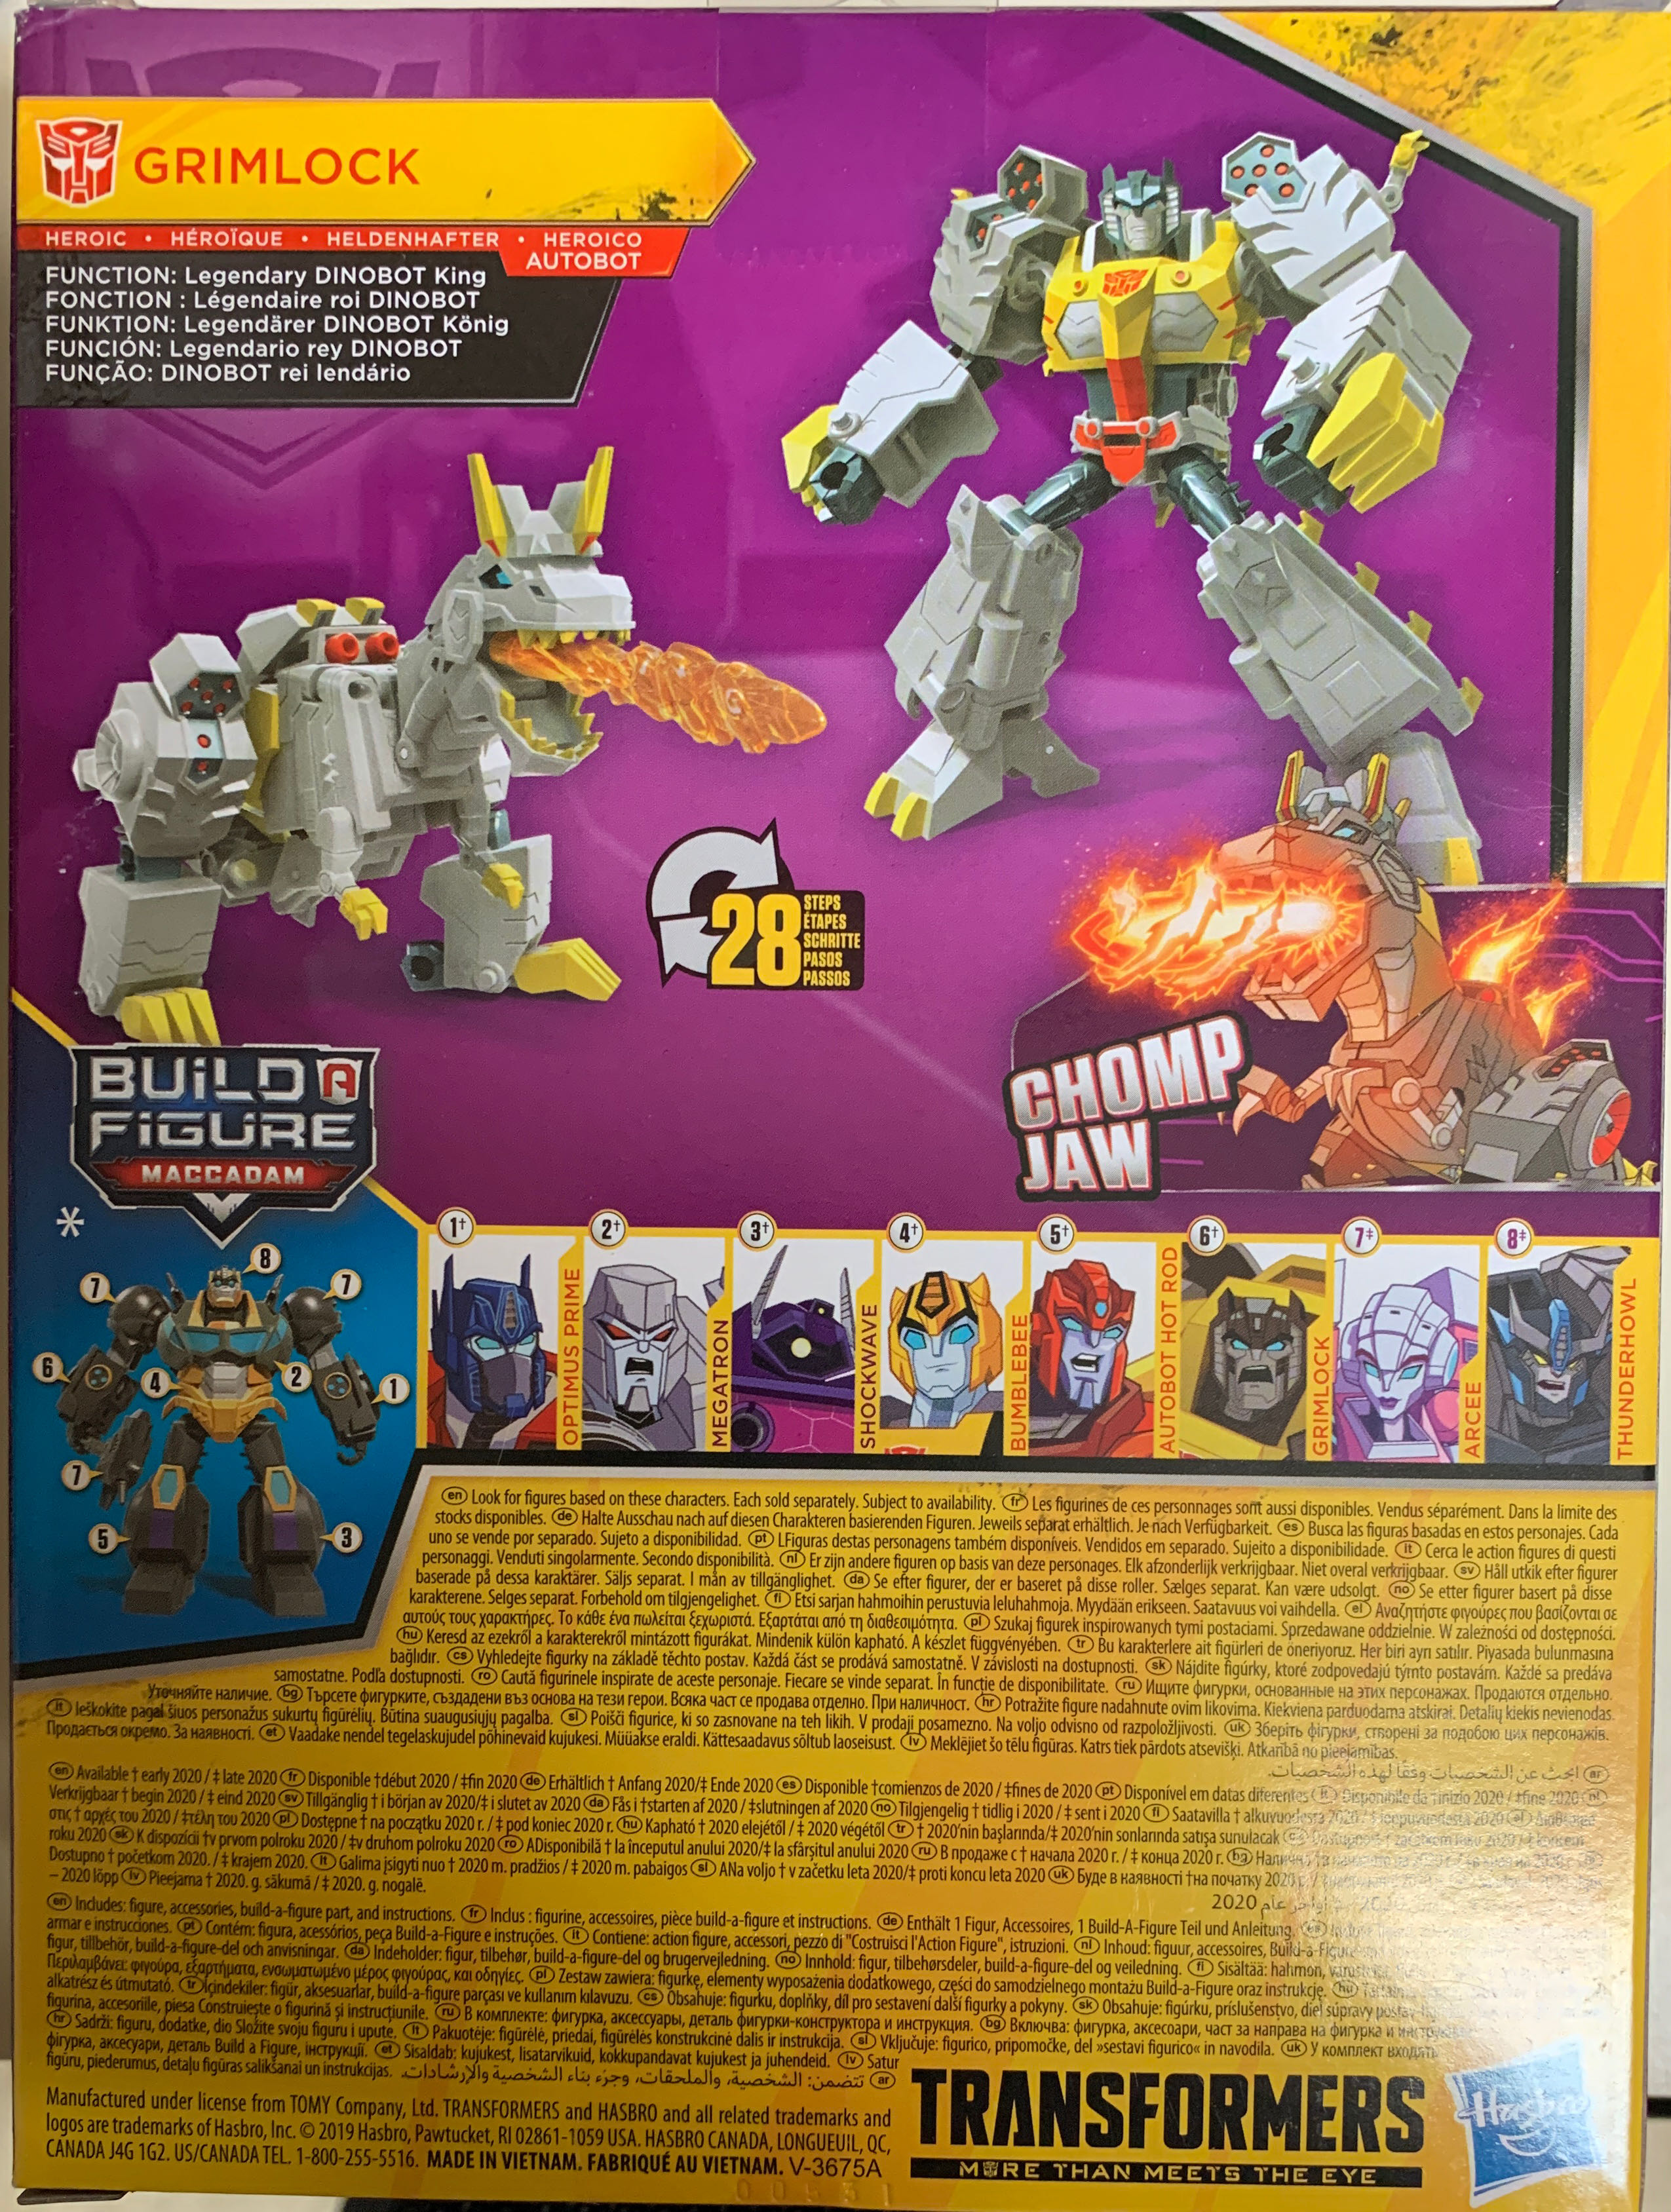 Bumblebee Transformers #6. Grimlock - Hasbro (Transformers: Bumblebee) action figure collectible [Barcode 5010993644070] - Main Image 2